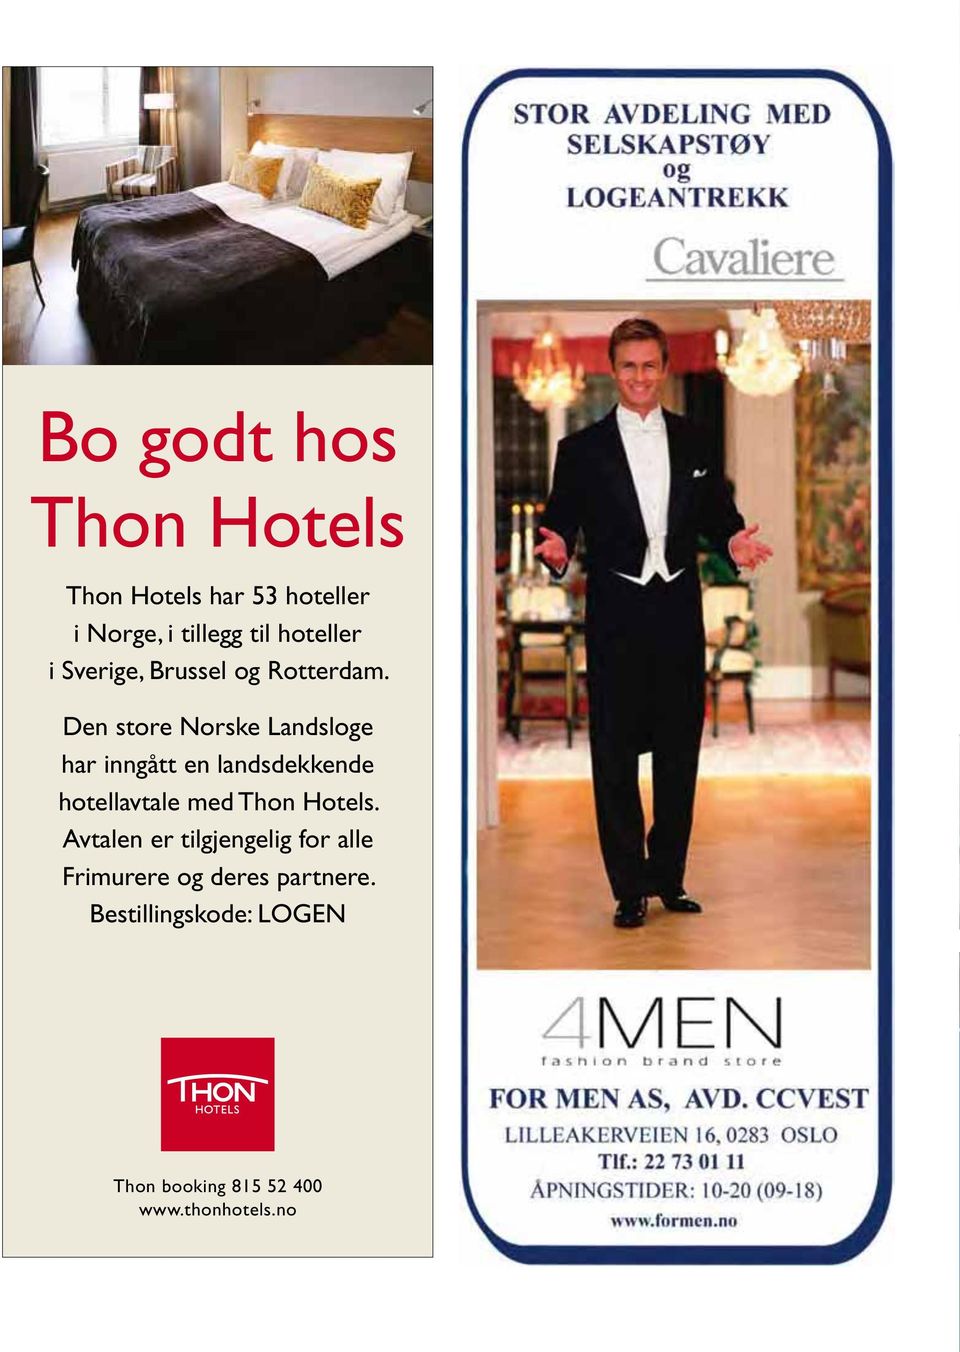 Den store Norske Landsloge har inngått en landsdekkende hotellavtale med Thon